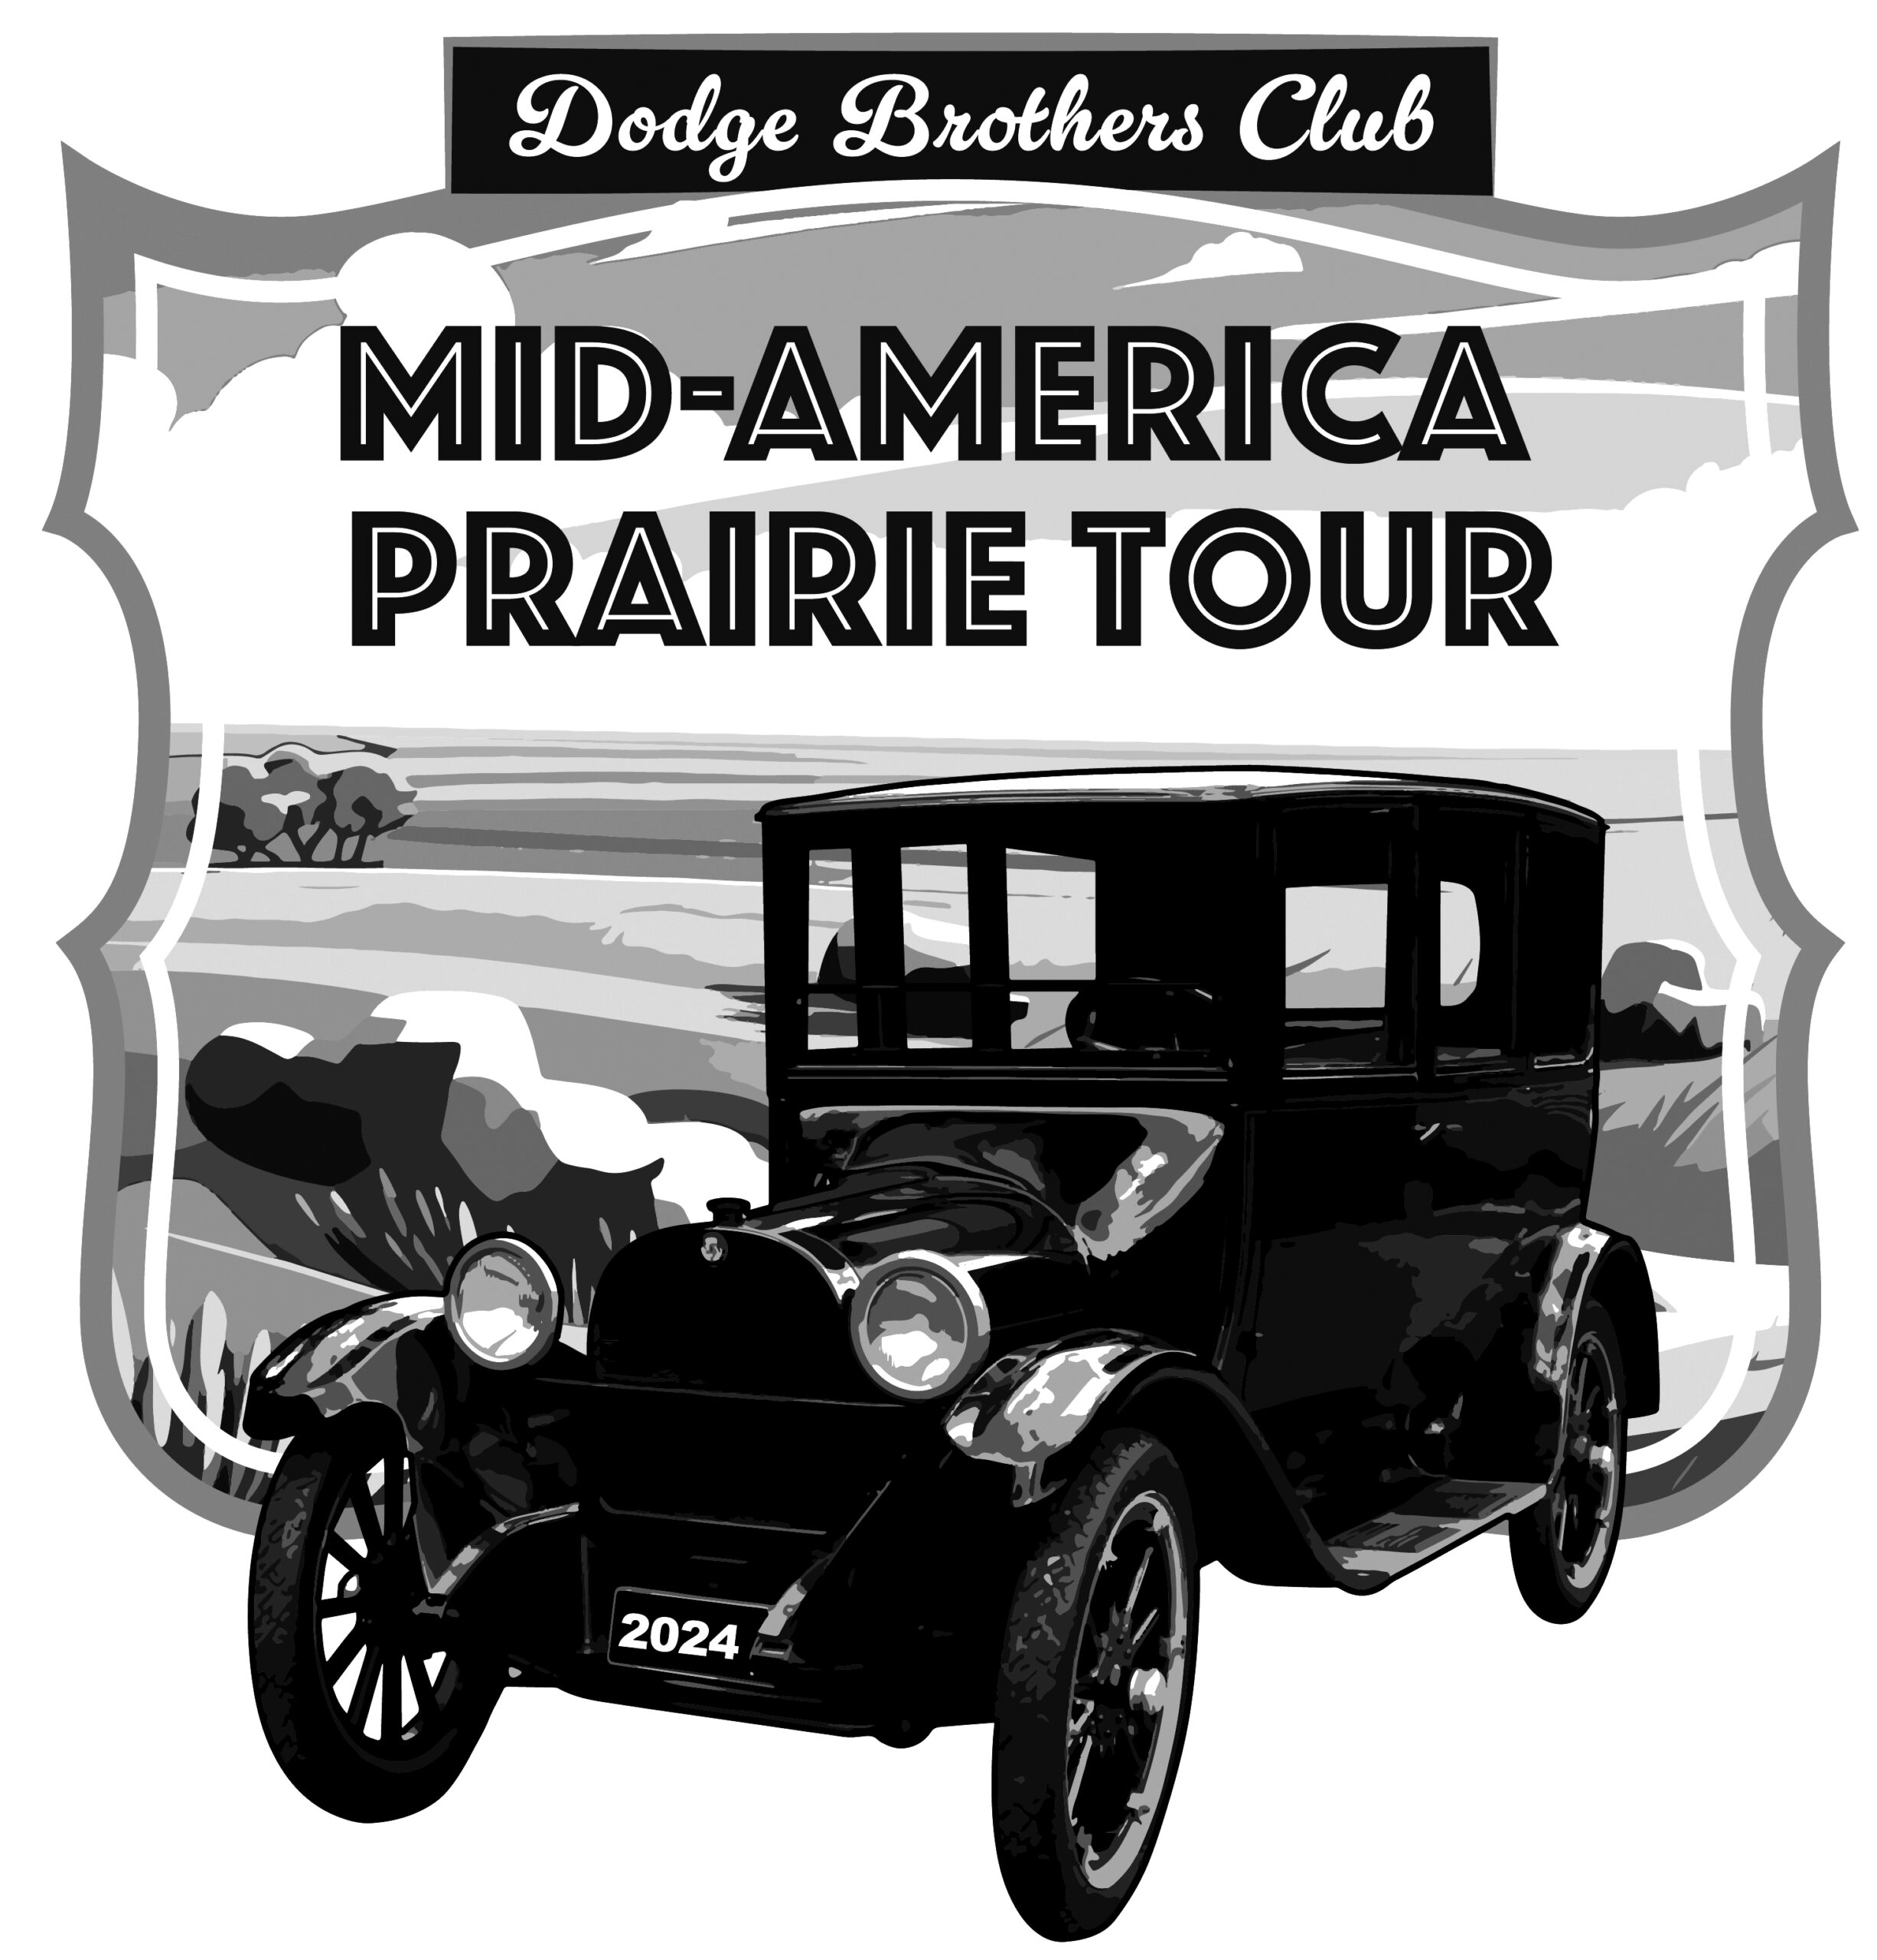 Dodge Brothers Club Annual Meet “Mid-America Prairie Tour”